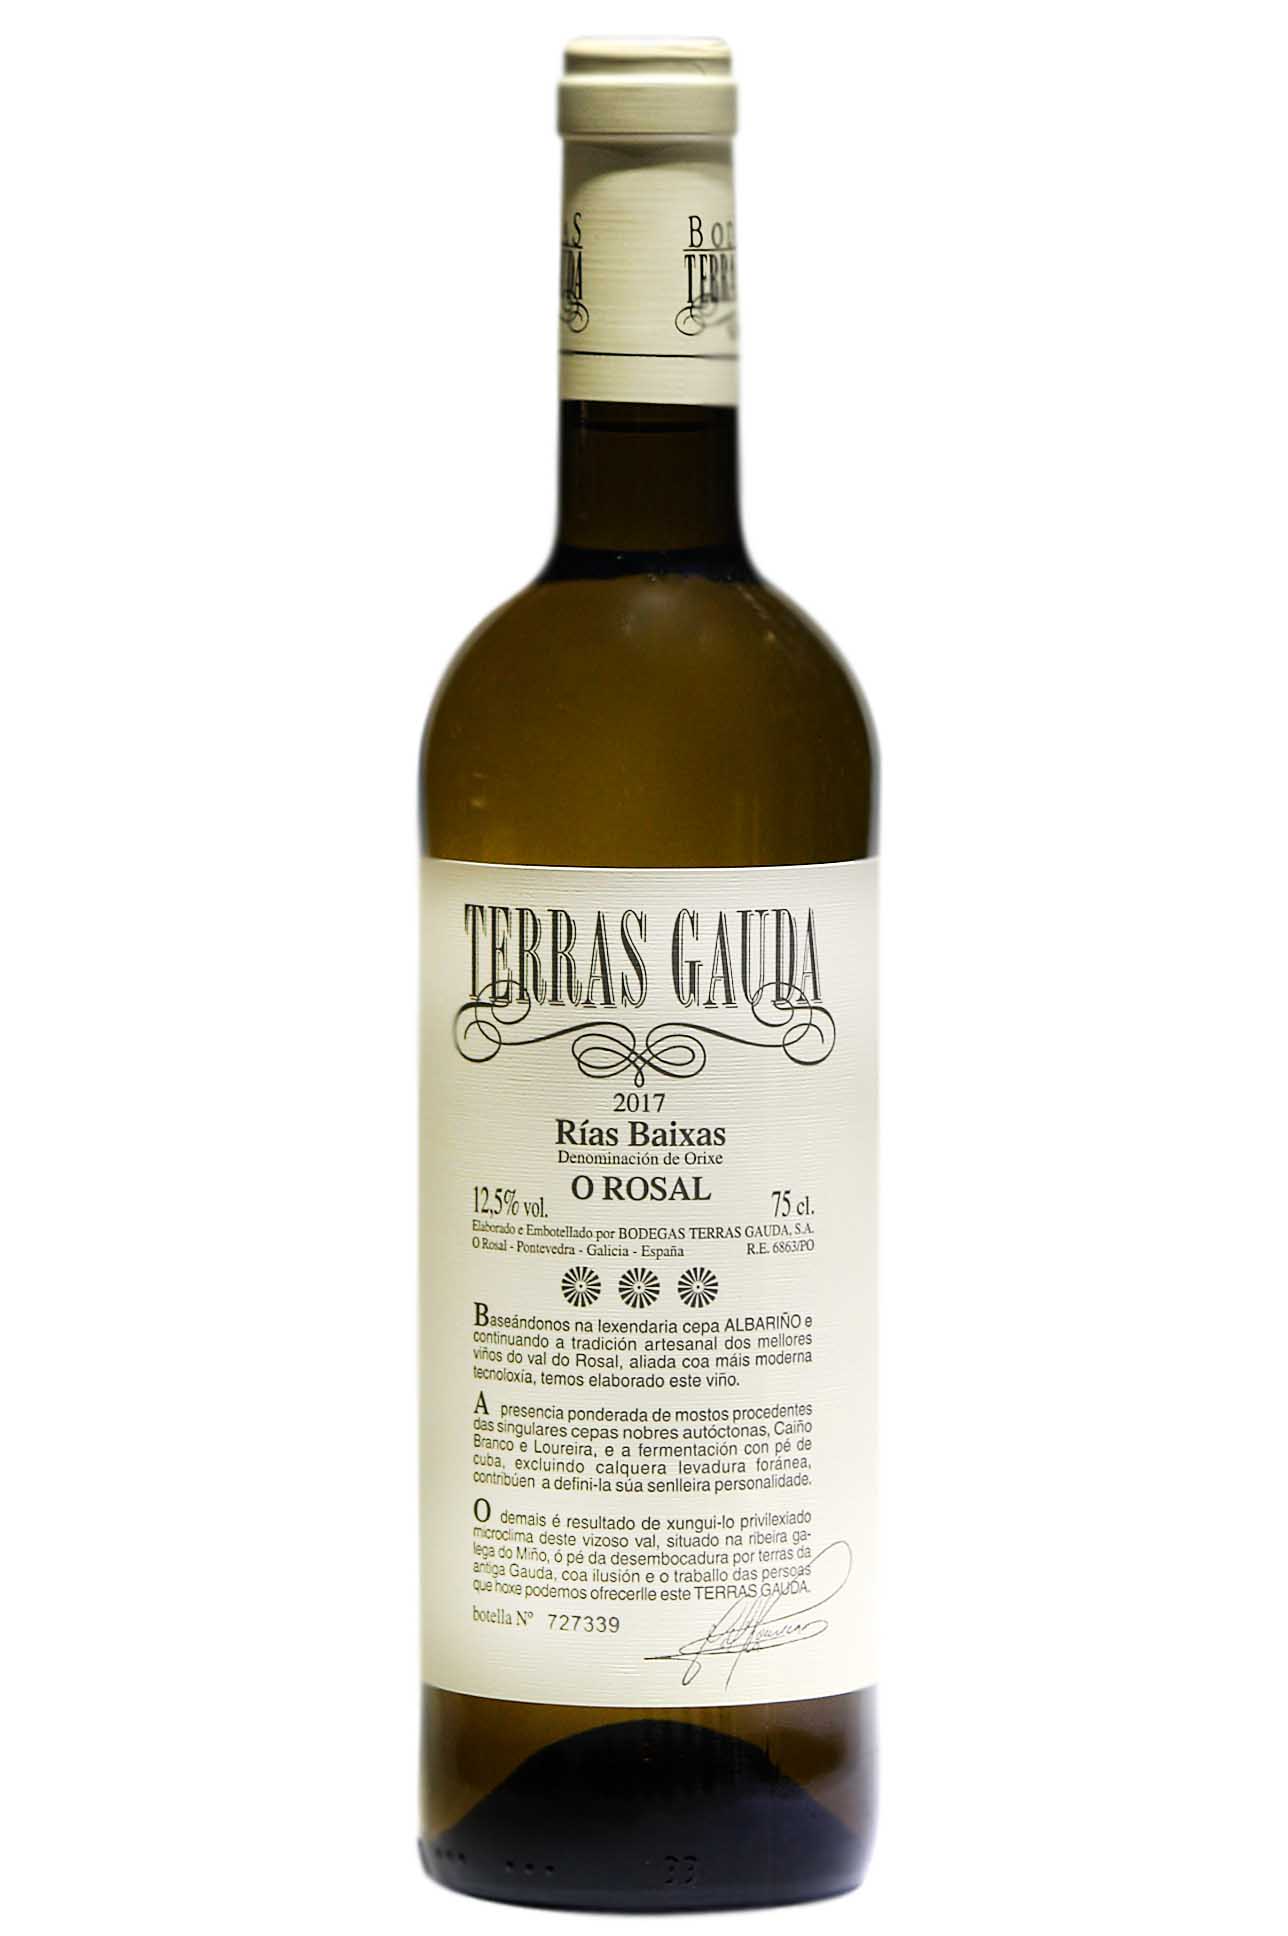 Terras gauda white wine